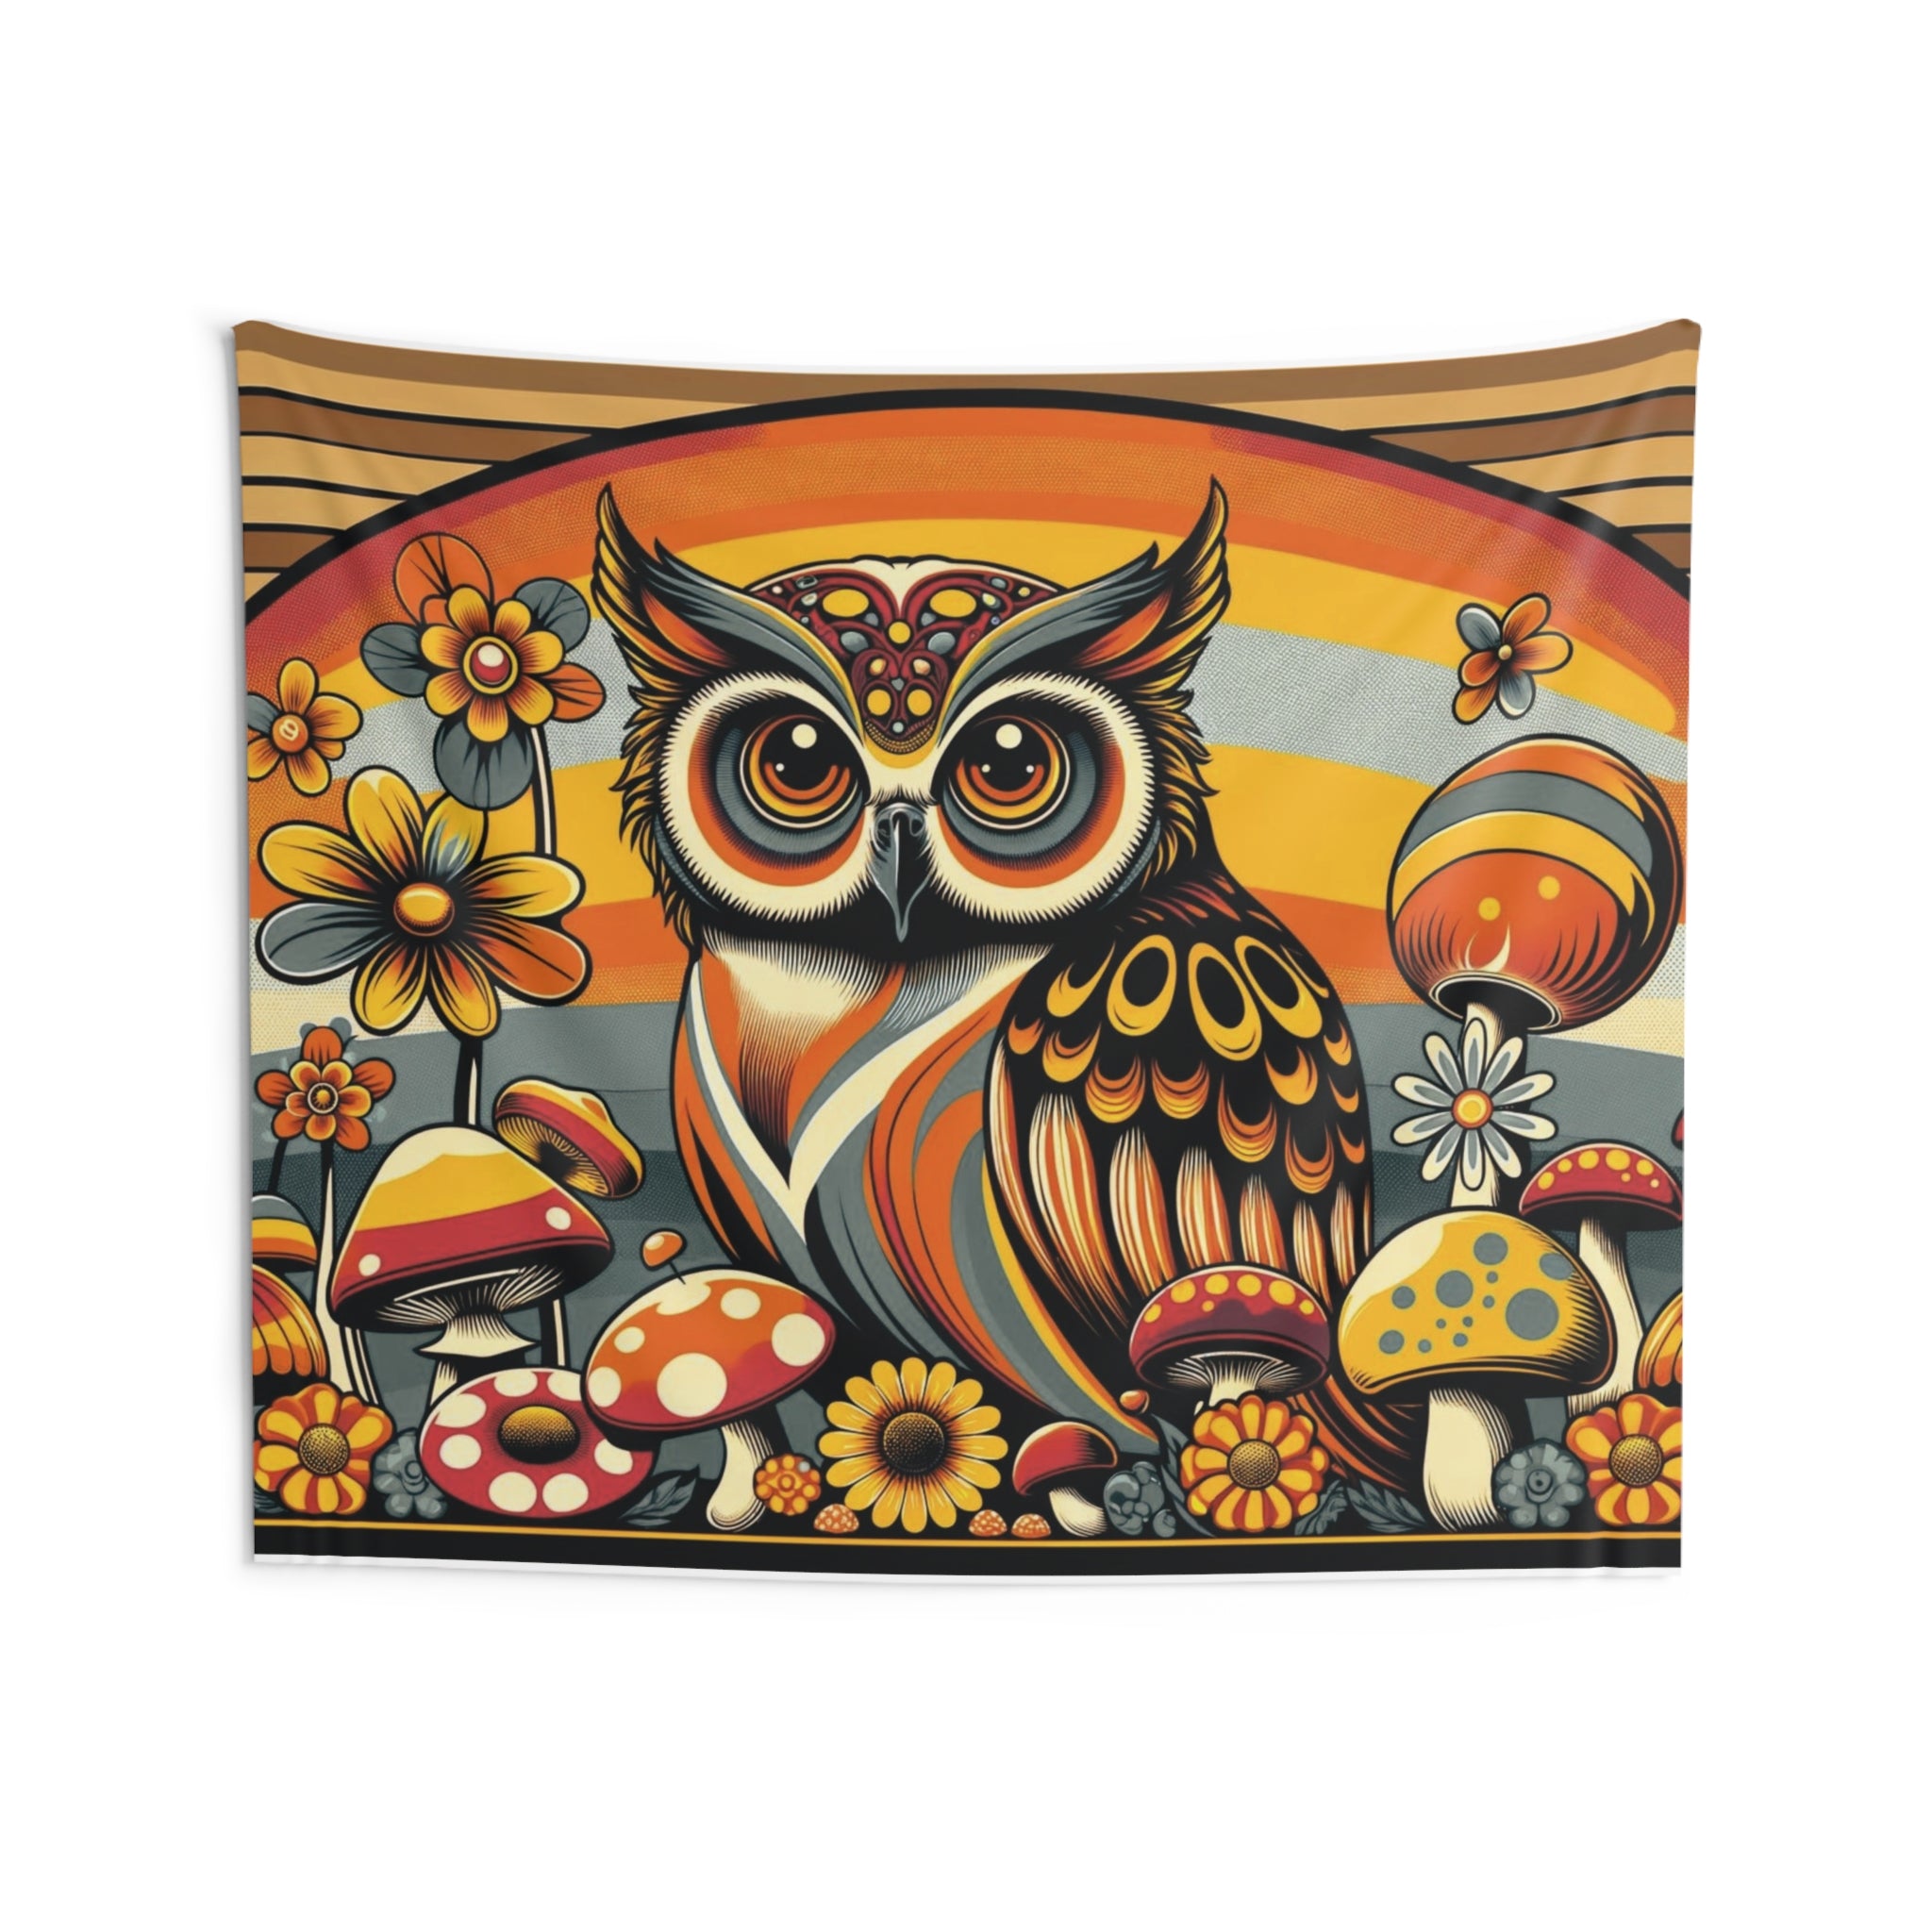 70s Owl Art, Hippie Boho Merry Mushroom, Groovy Brown, Orange, 1970s Home Decor Indoor Wall Tapestries